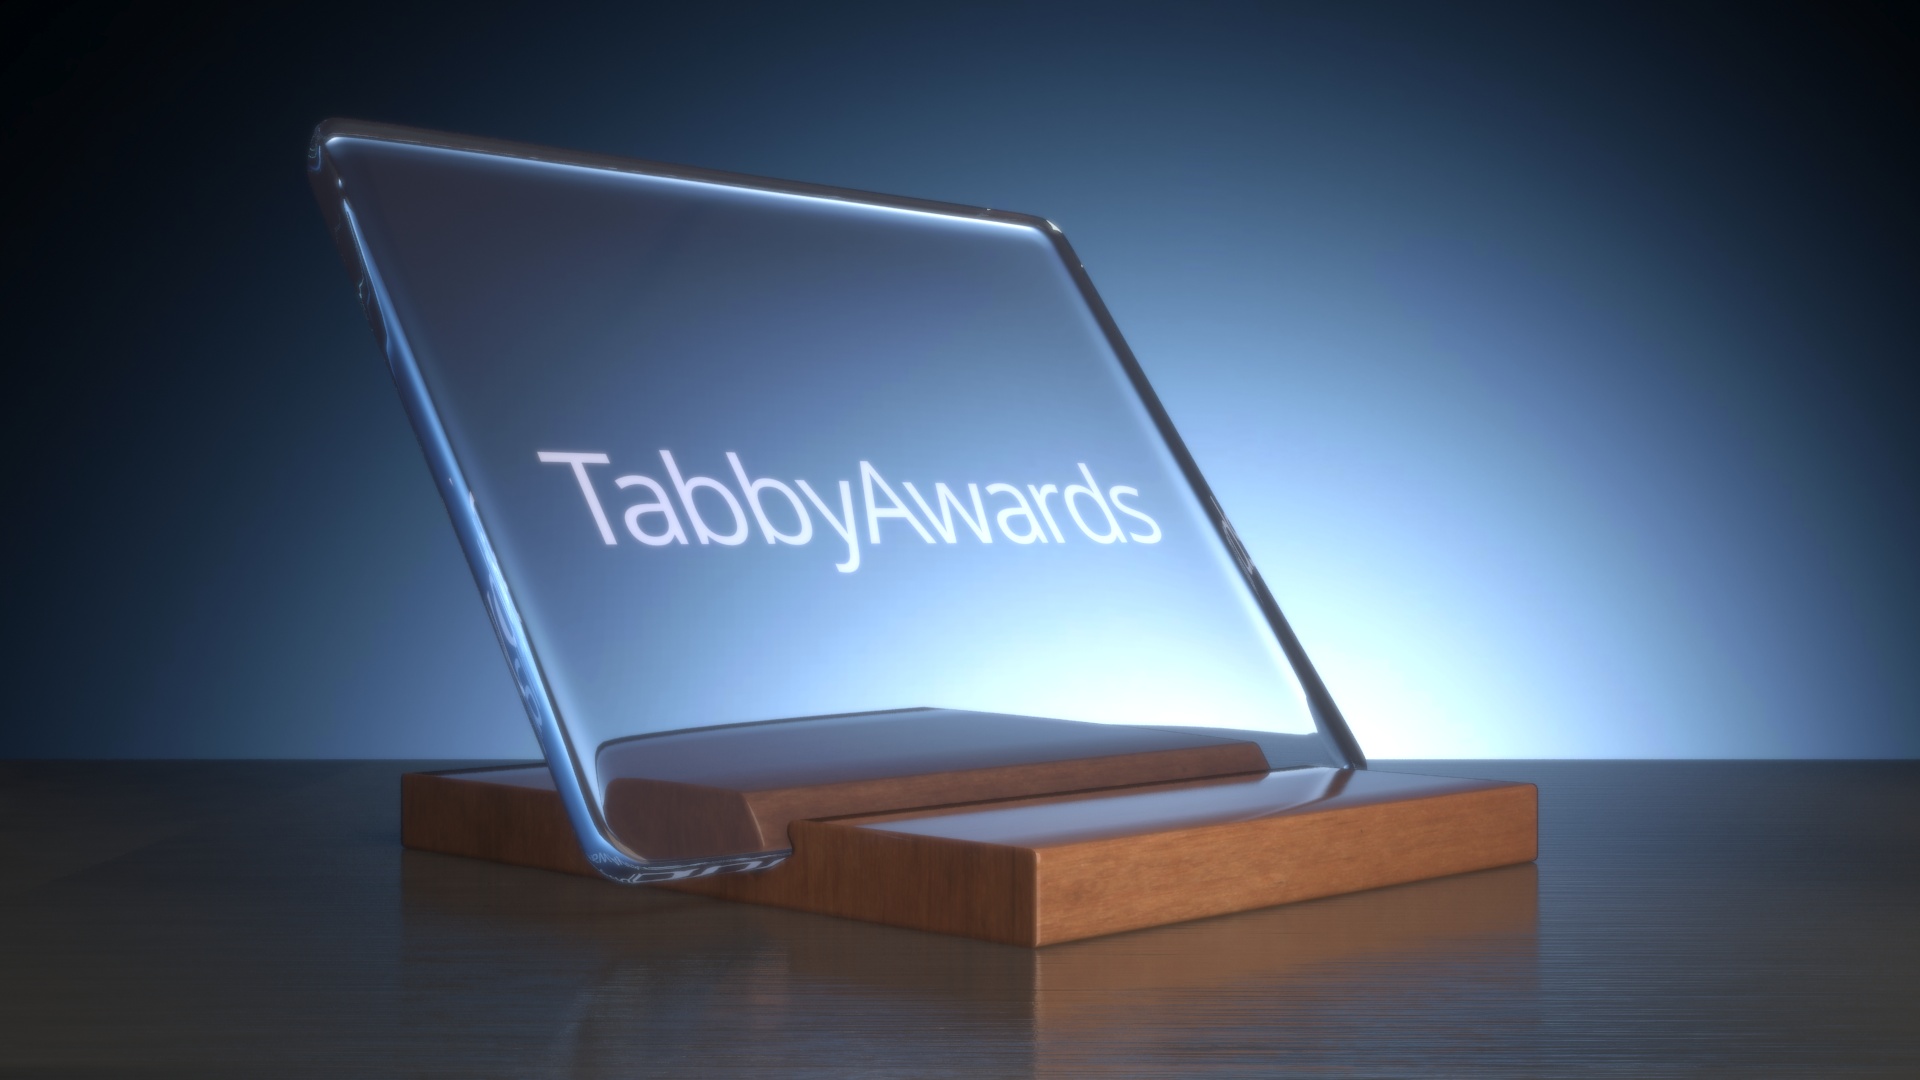 The Tabby Awards trophy